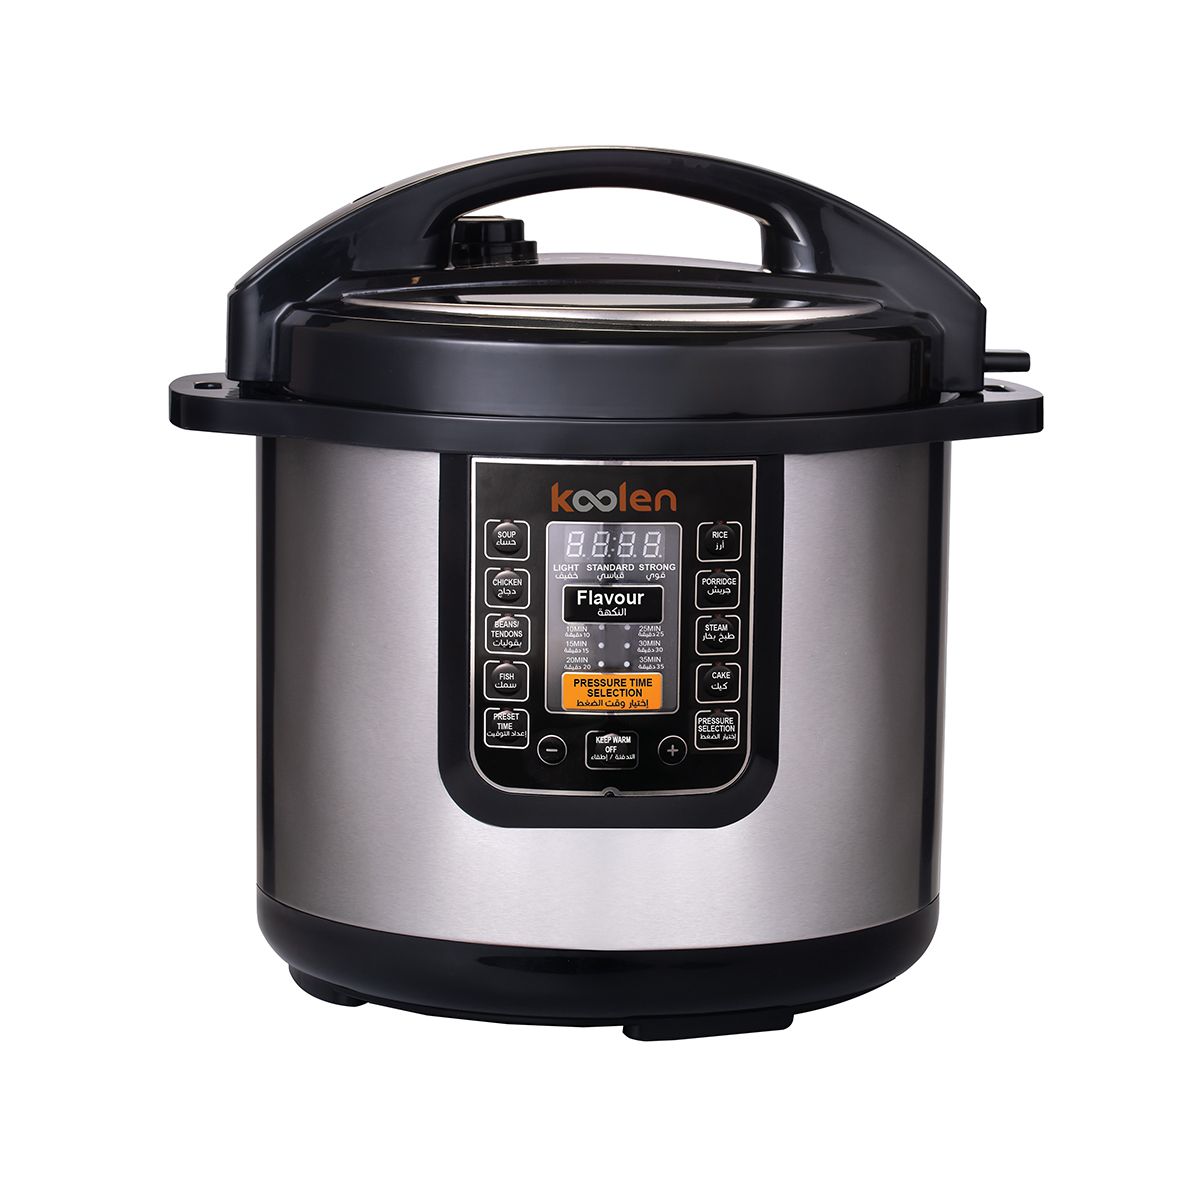 Koolen Pressure Cooker 8 Liter, 1300W, Memory Function, 12 Functions, Silver - 816106003